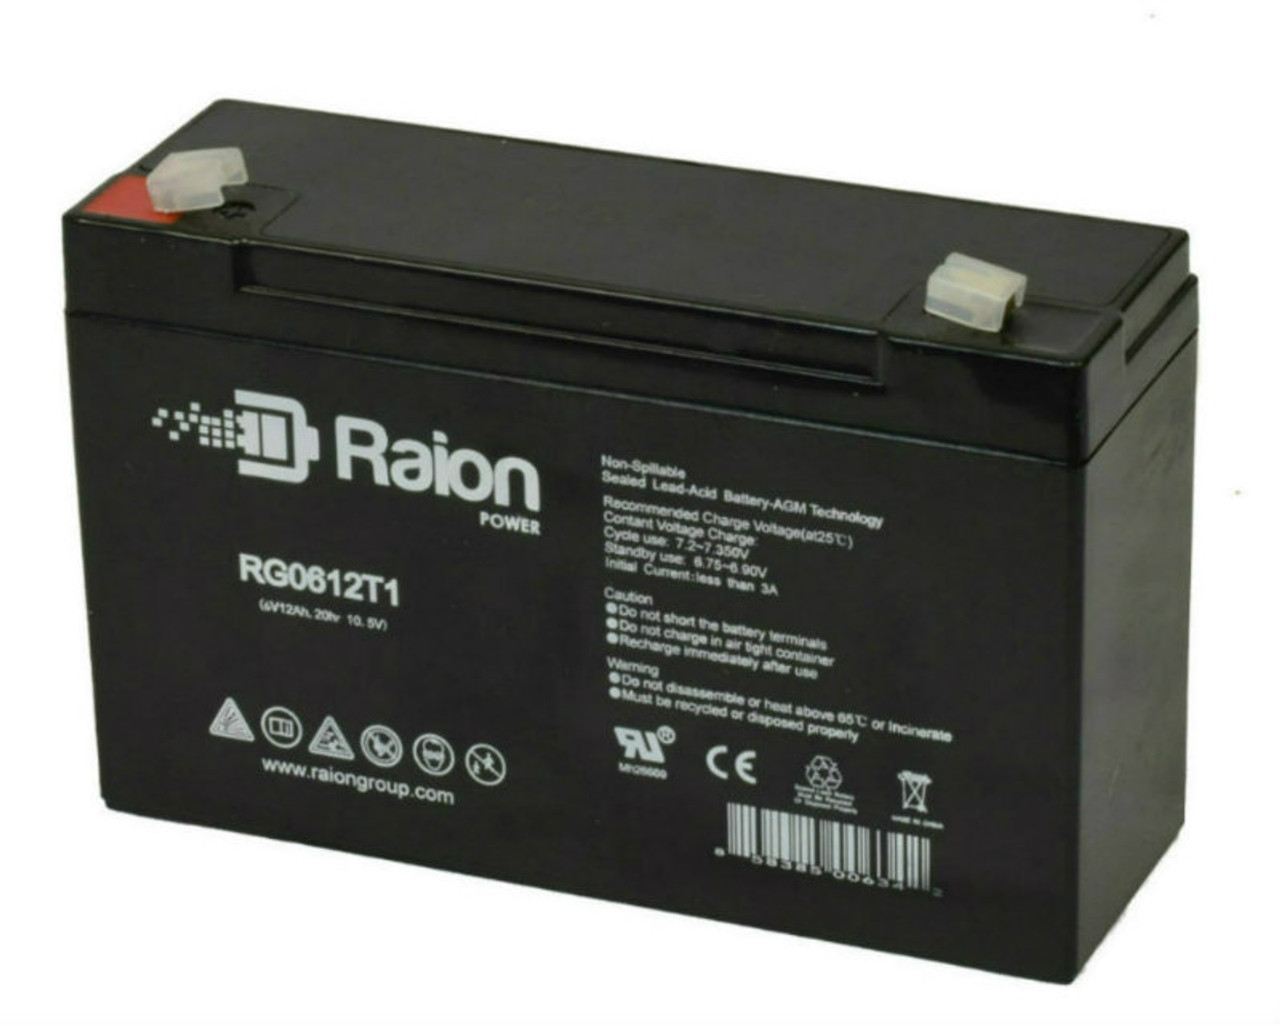 Raion Power RG06120T1 Replacement Emergency Light Battery for Elan 1637